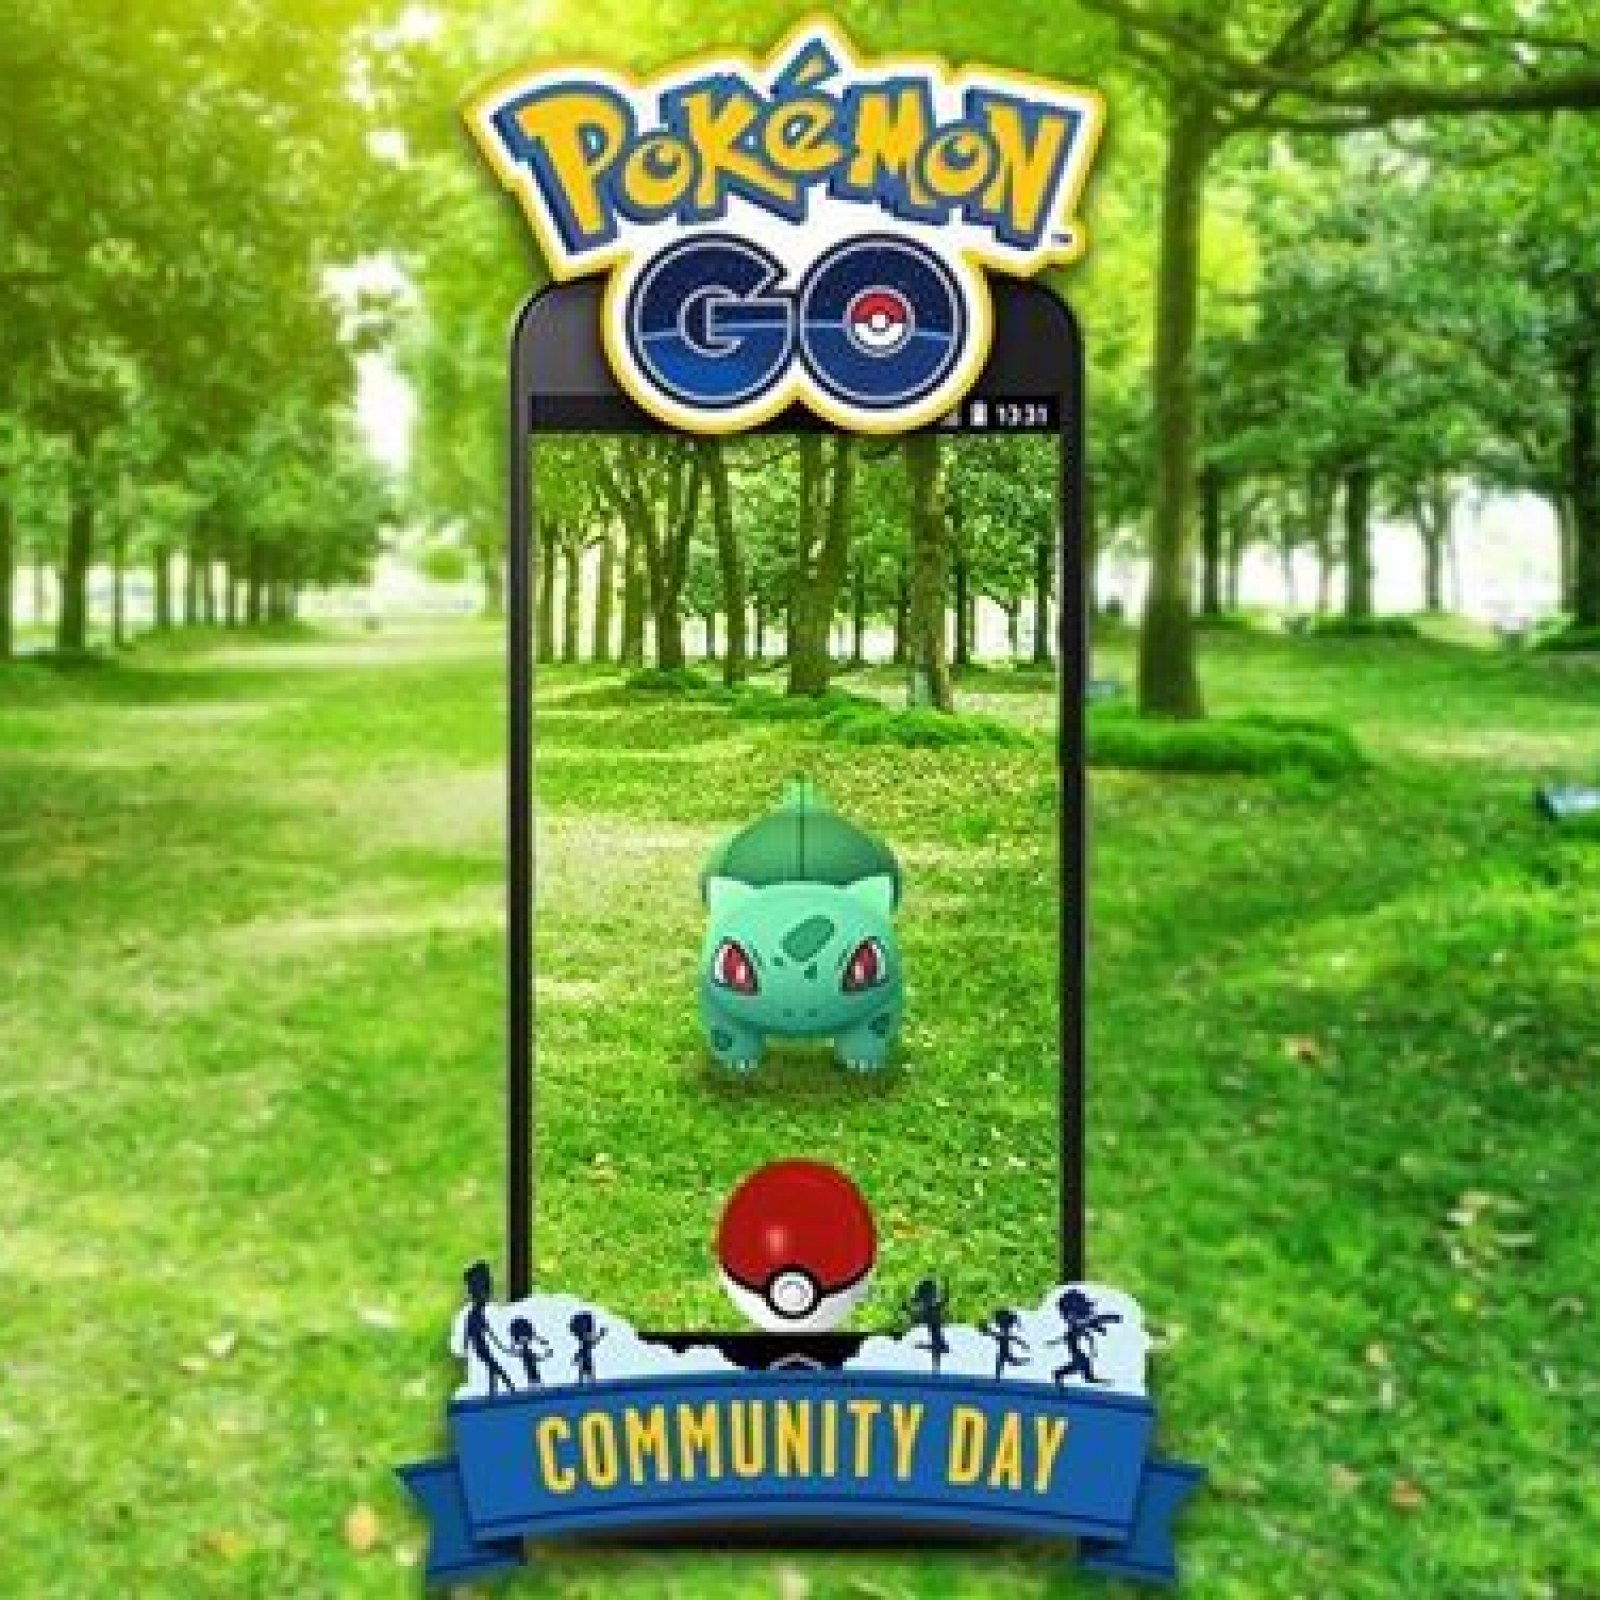 Pokemon Go Adds Shiny Bulbasaur Family Ahead of Community Day